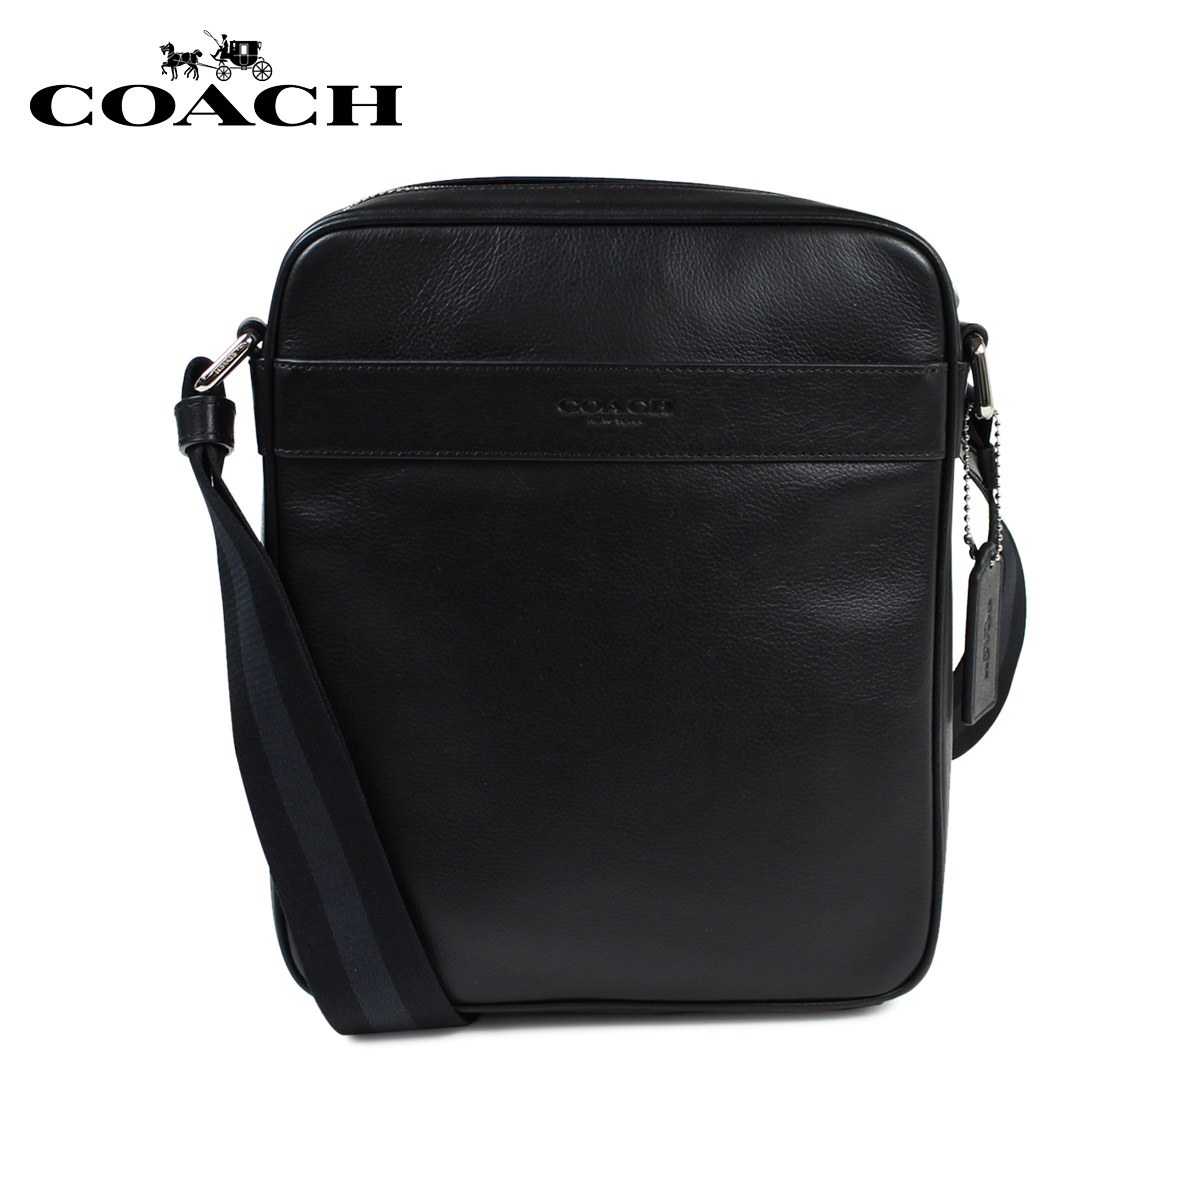 Sugar Online Shop: COACH coach bag shoulder bag men black black F54782 | Rakuten Global Market